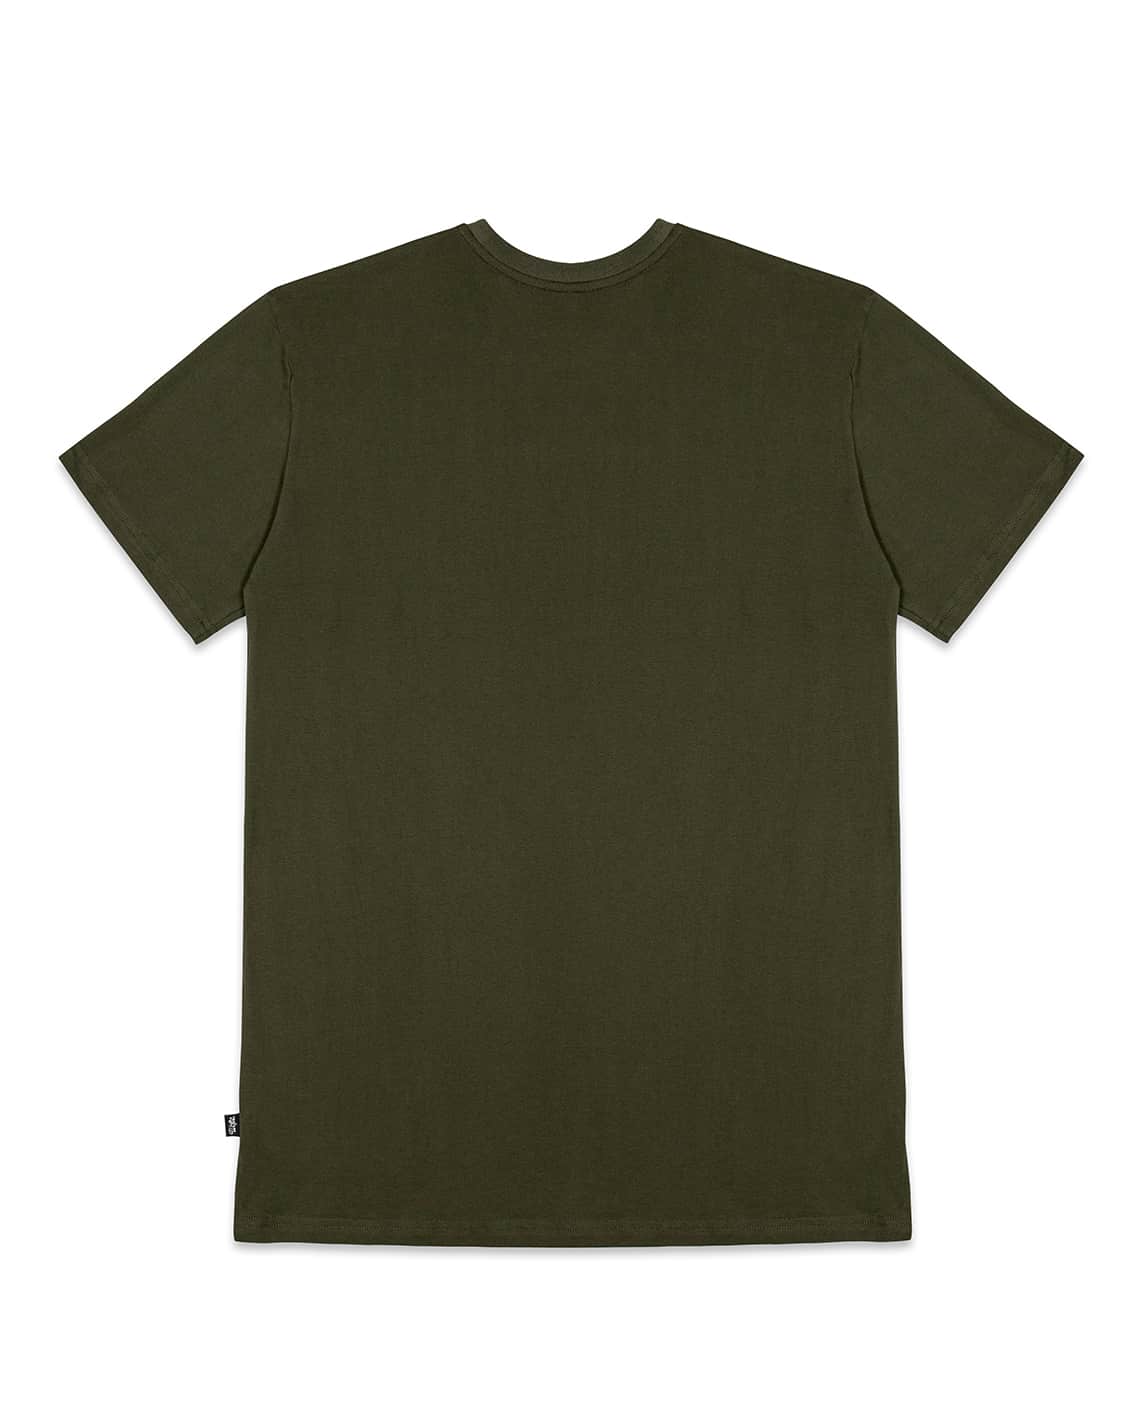 Olive-Green T-shirt — Carp Bait USA